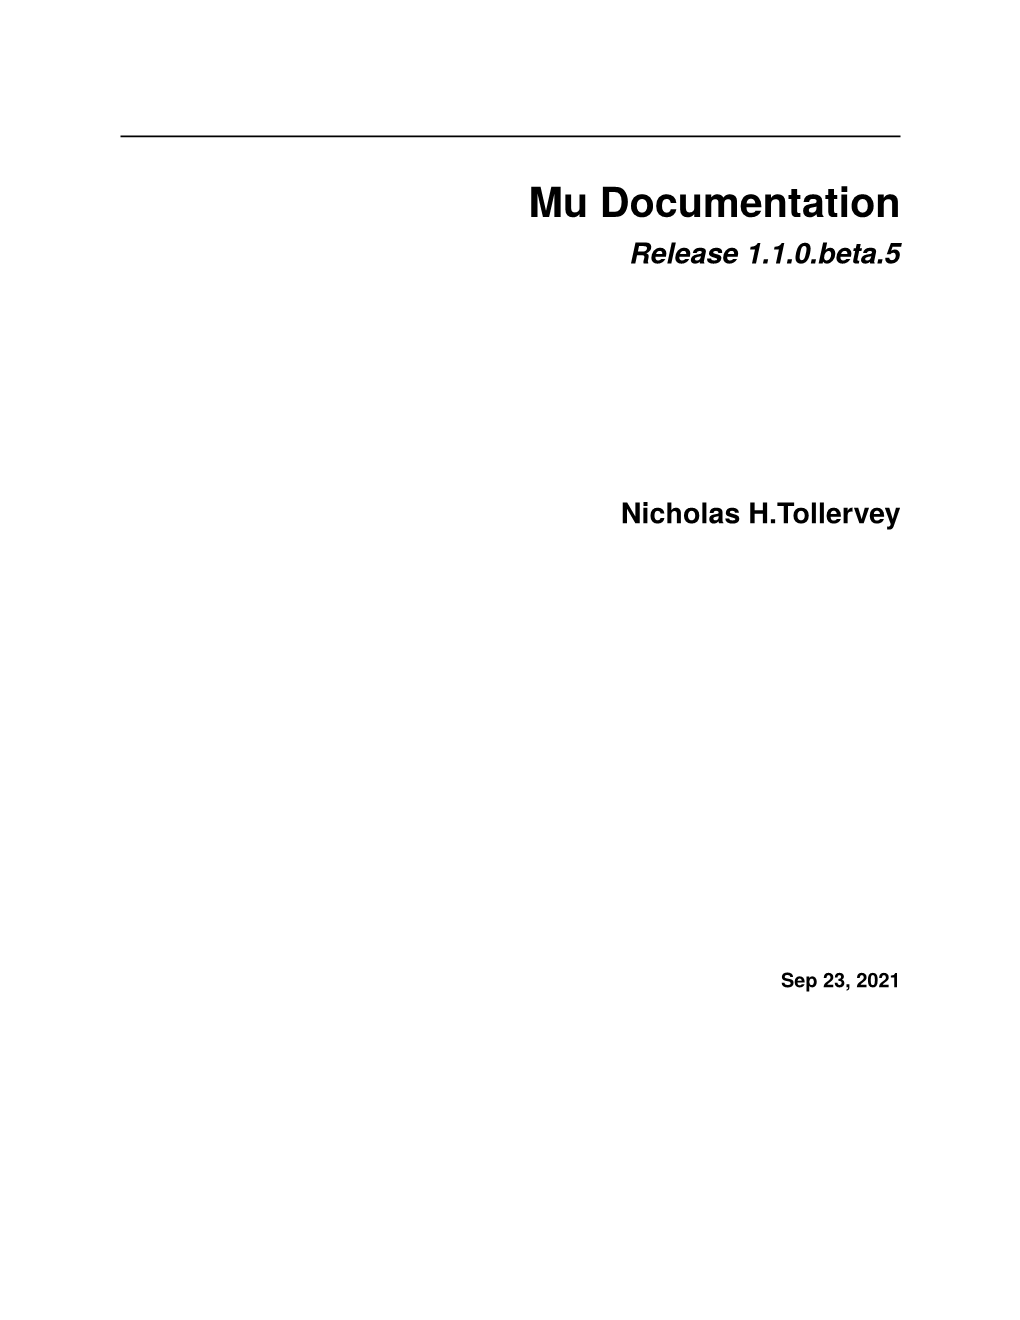 Mu Documentation Release 1.1.0.Beta.5